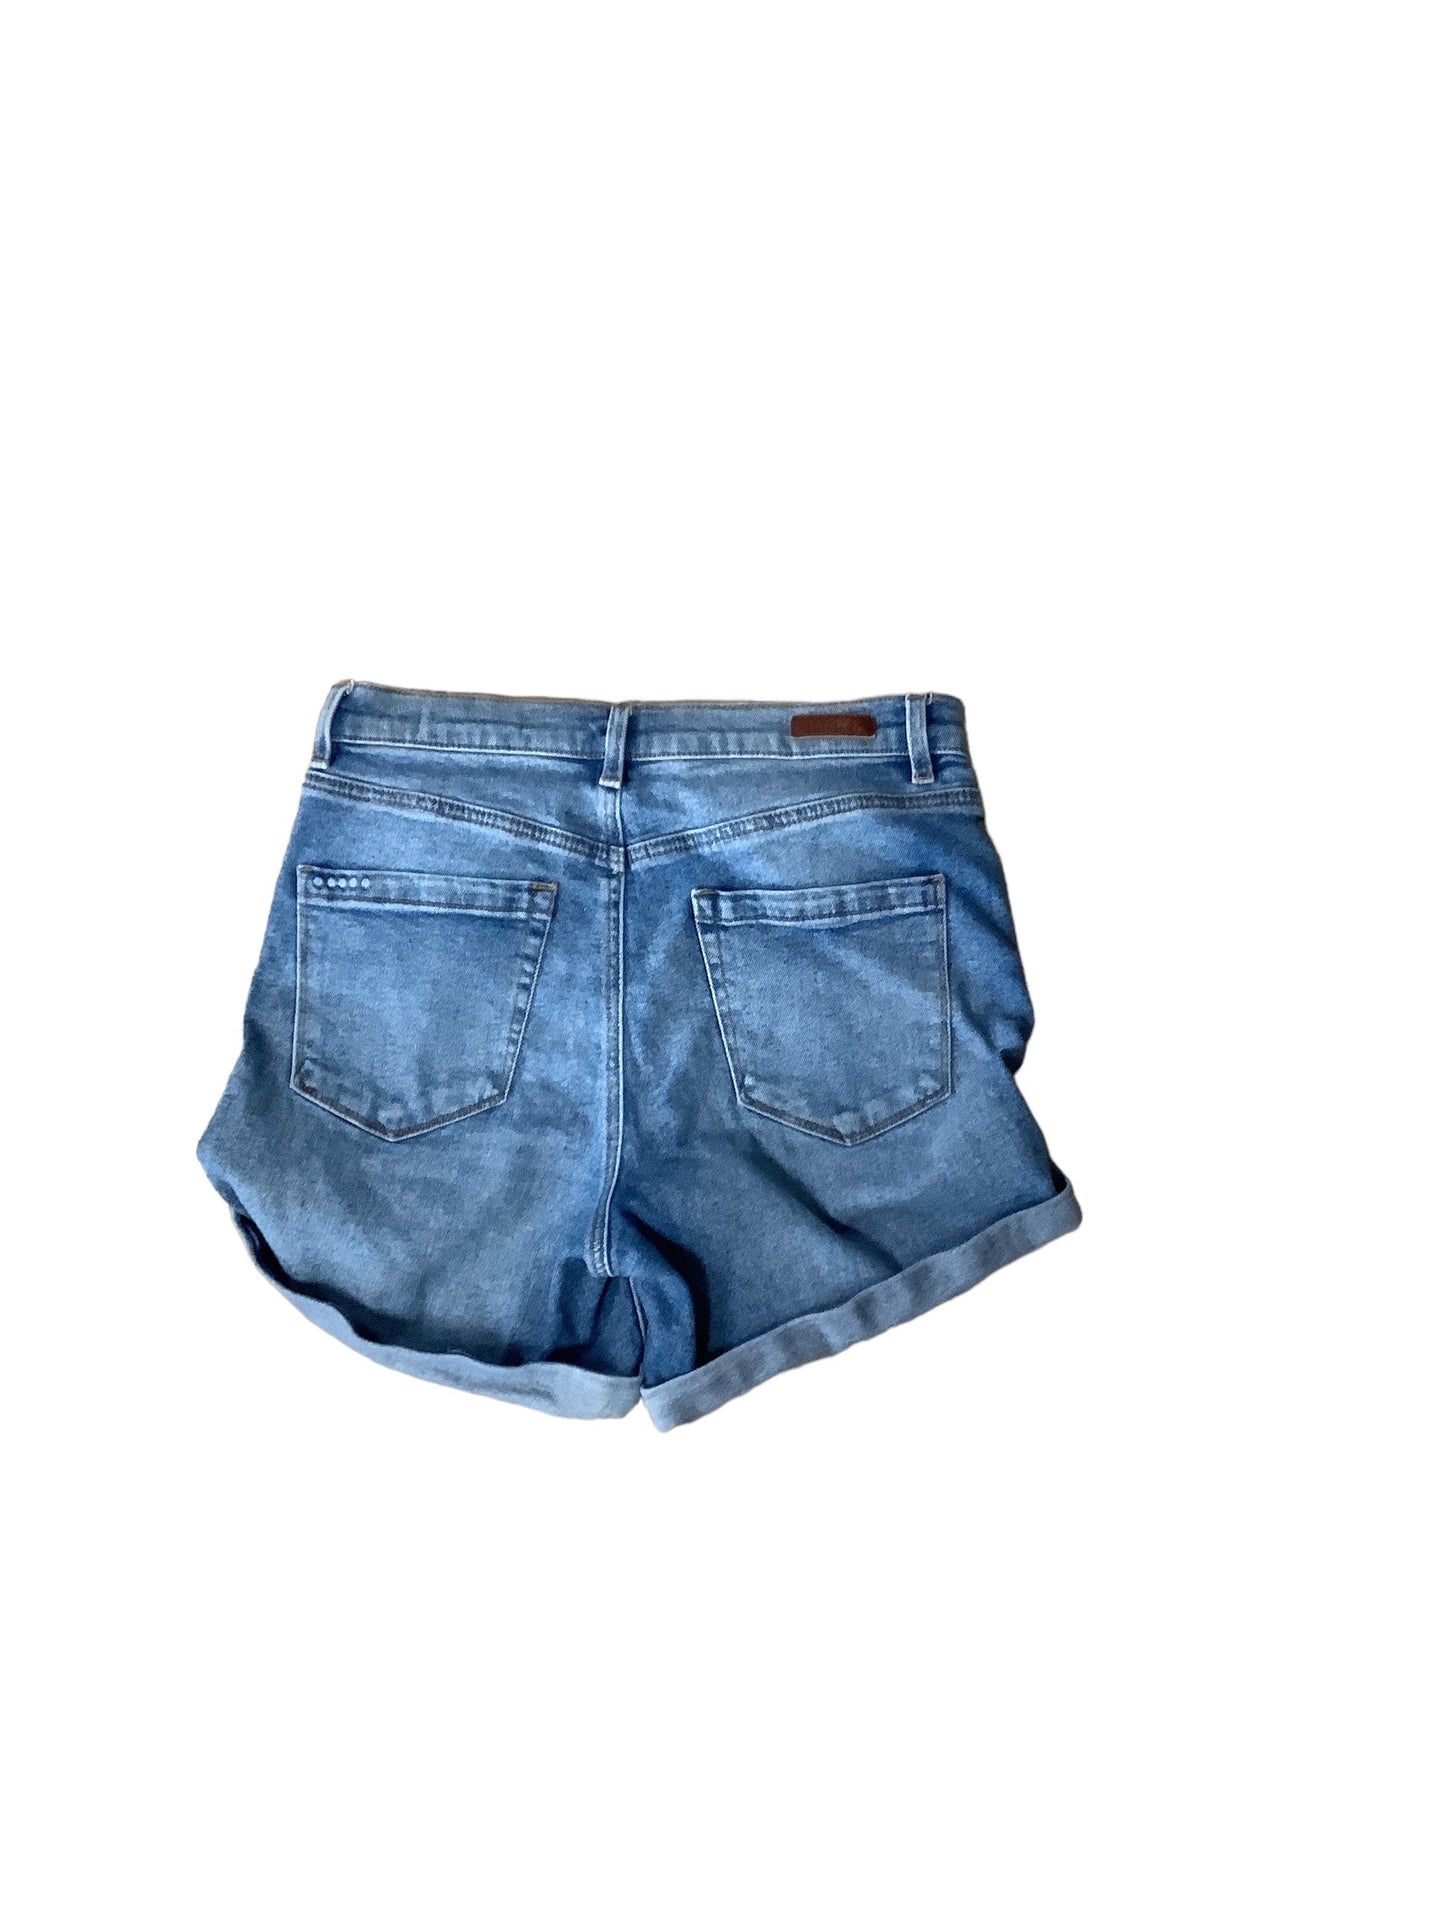 Shorts By Blanknyc  Size: 6